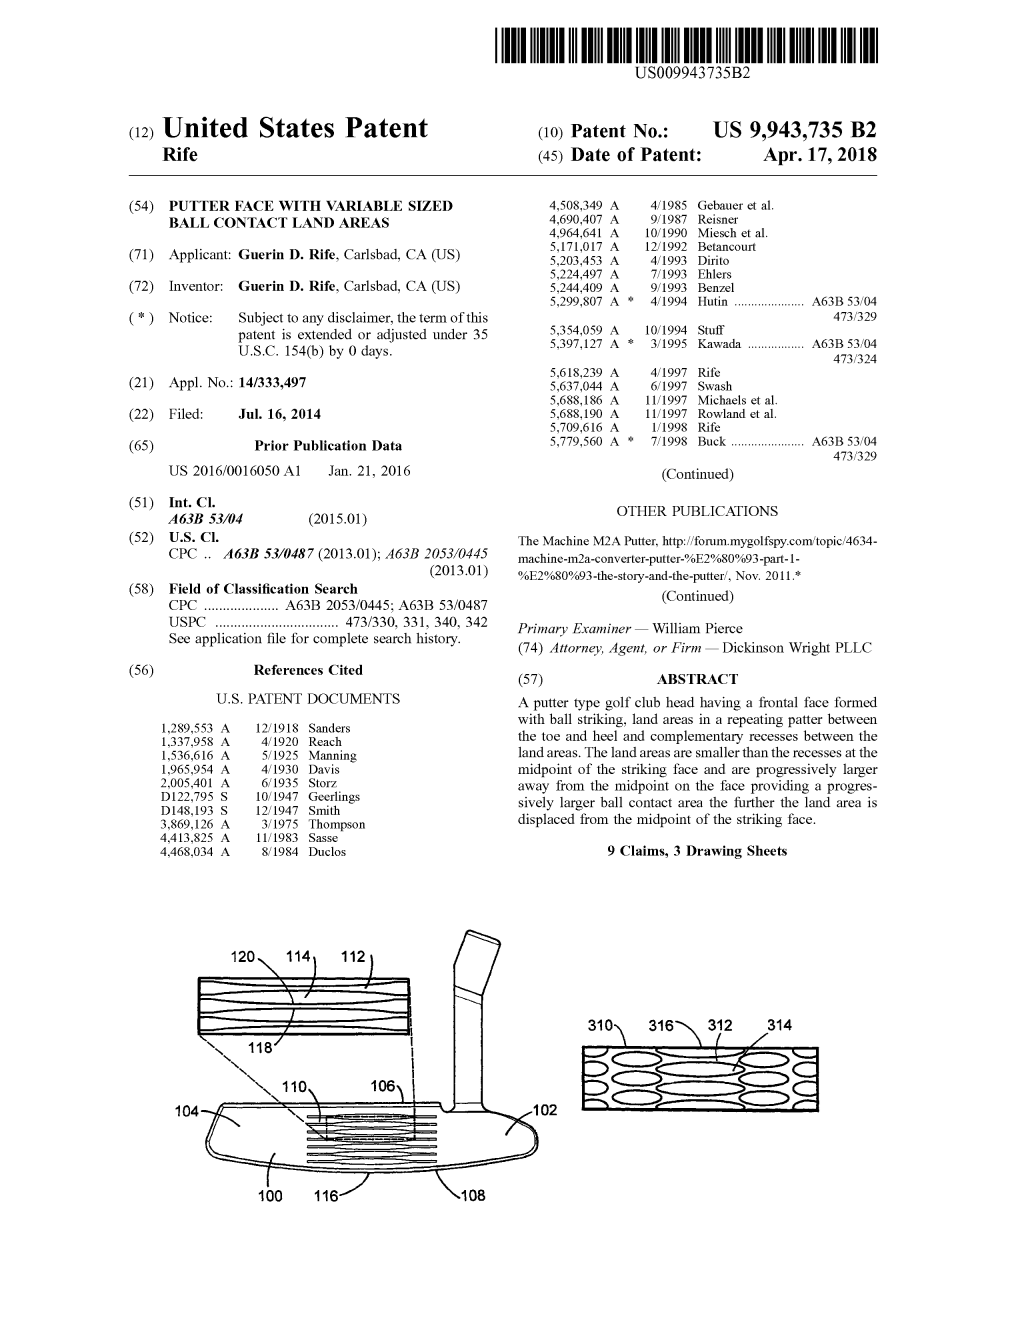 ( 12 ) United States Patent 310 316 312